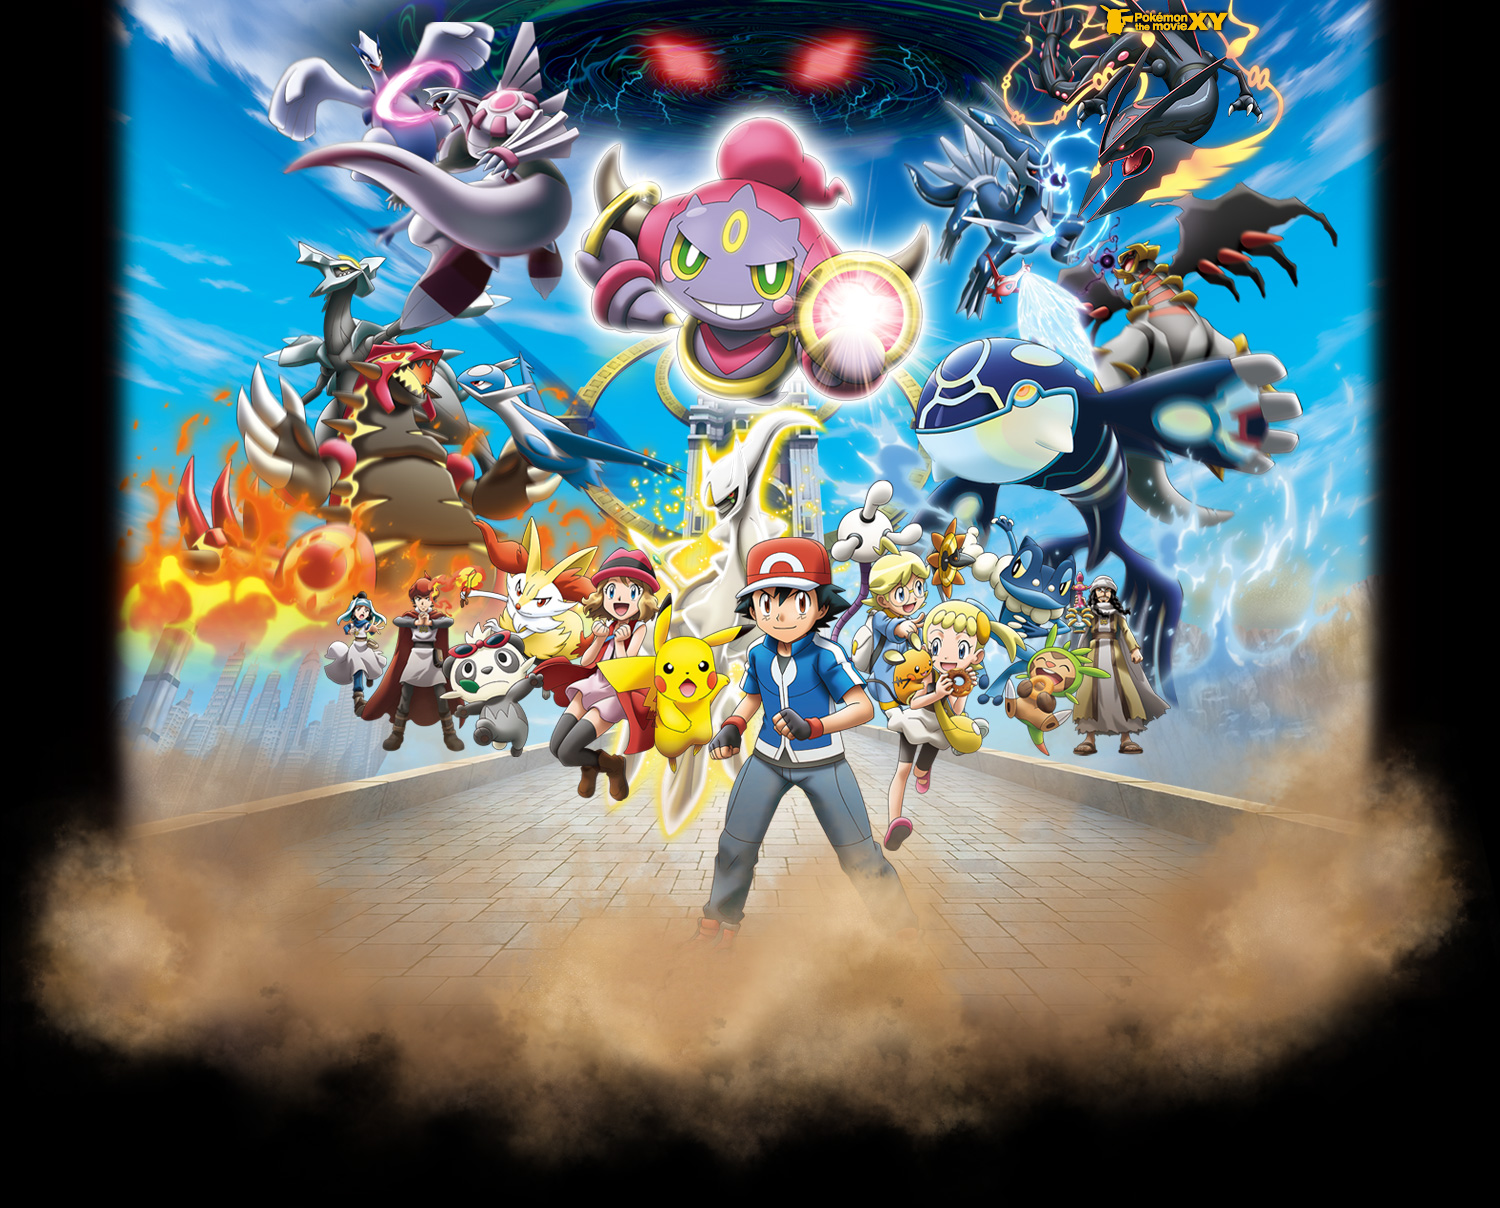 Pokemon Movie a Go at Legendary